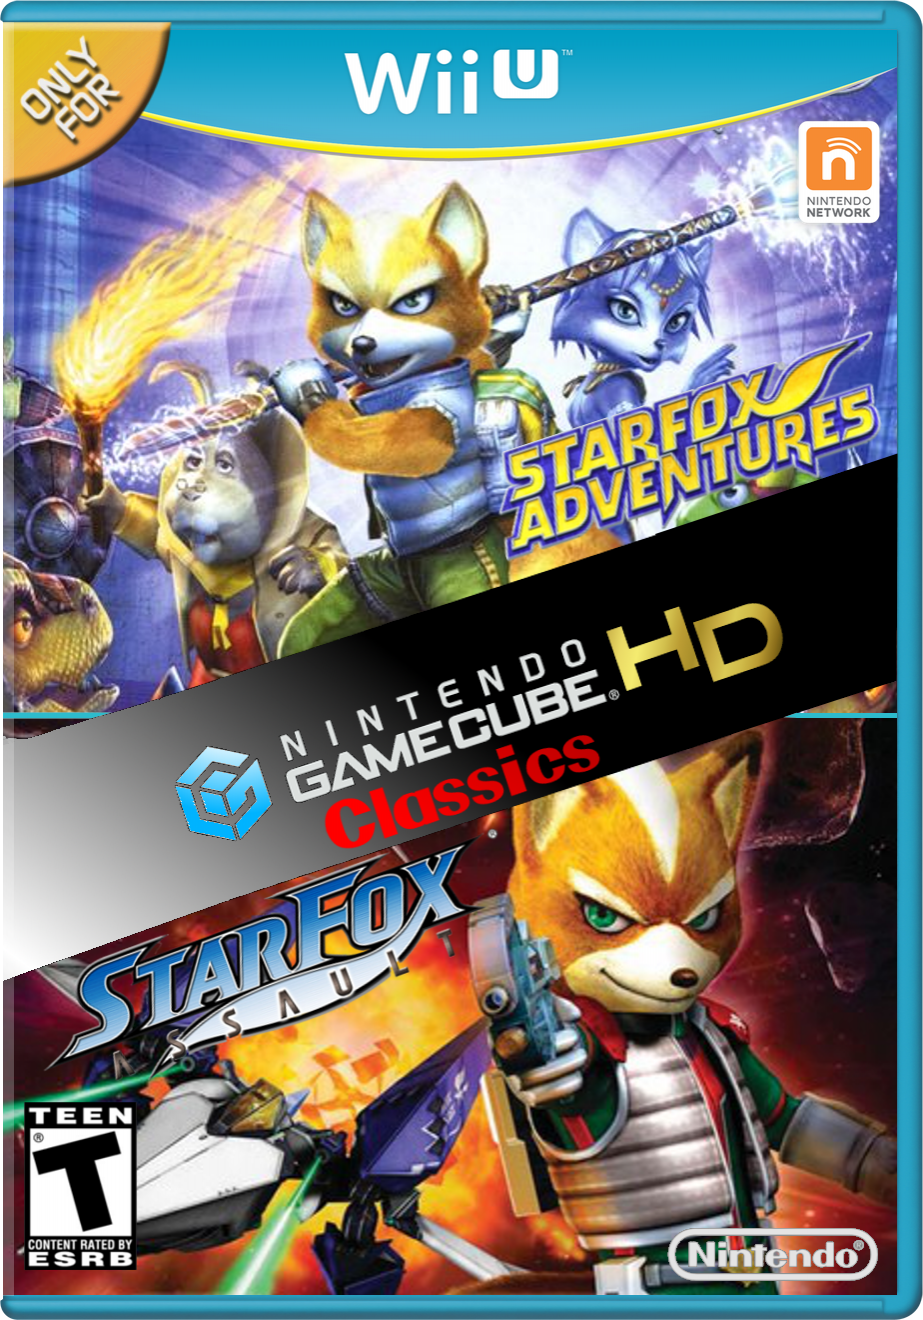 Star Fox - GameCube HD Classics box cover